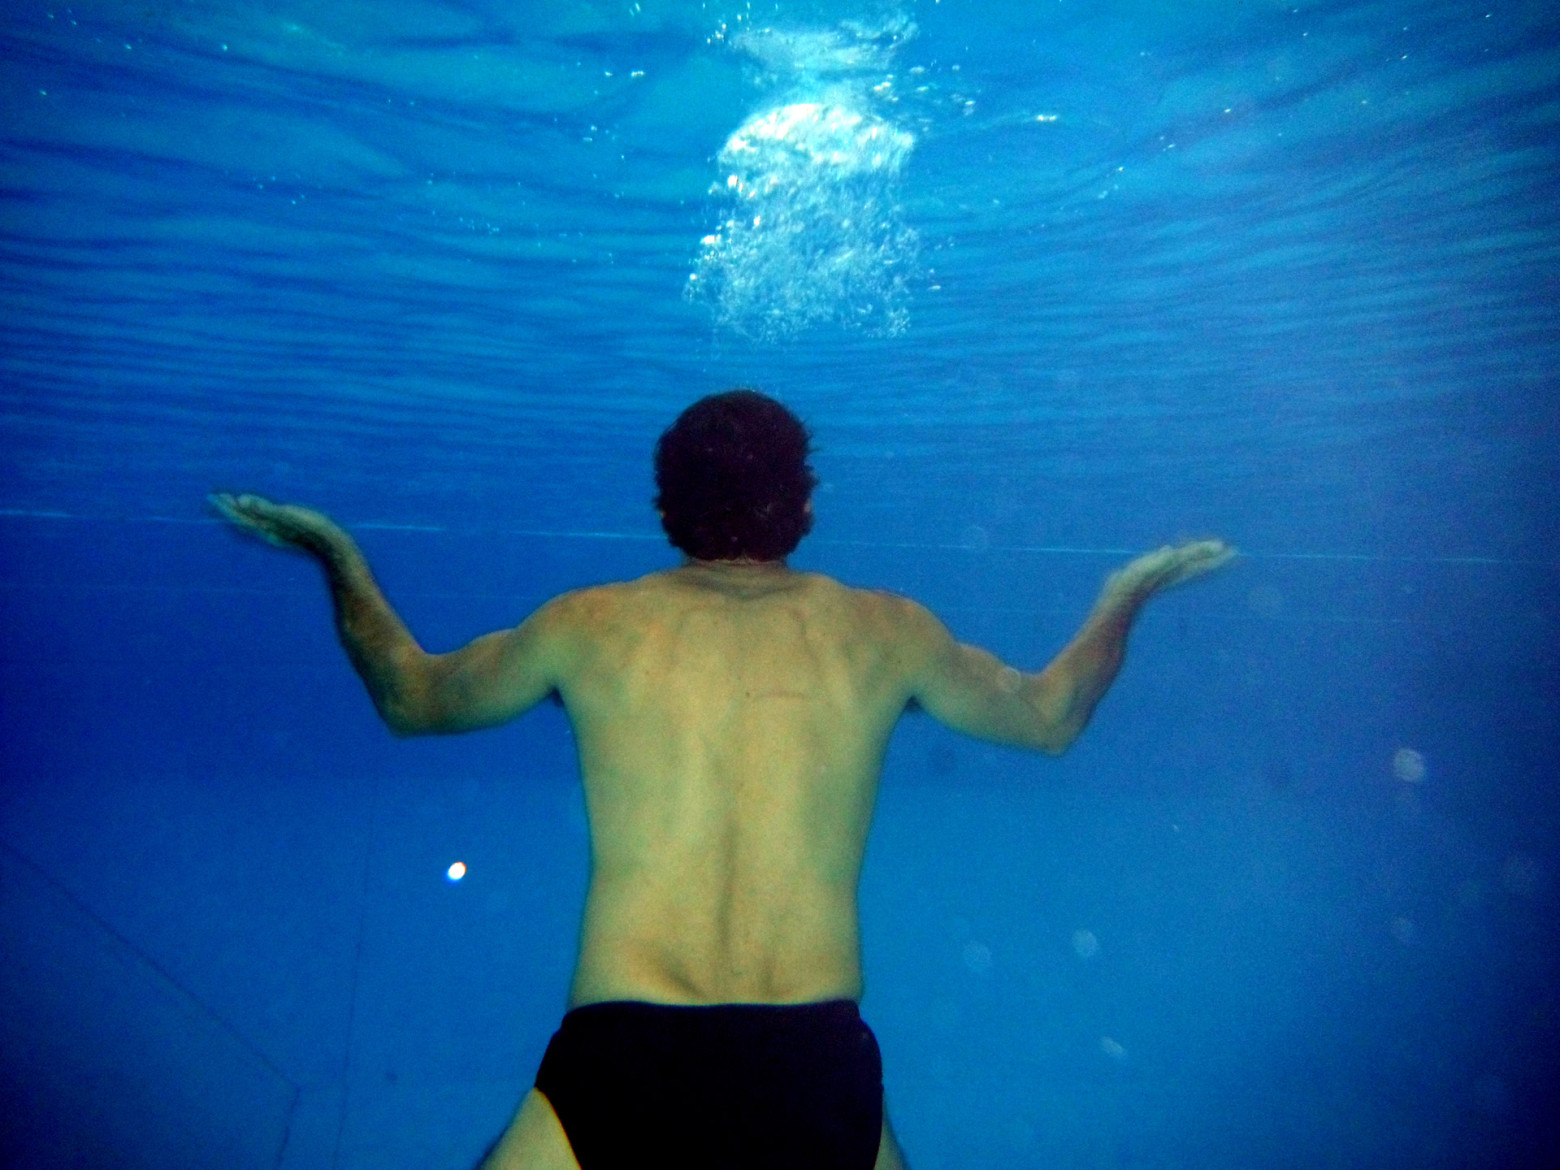 natation-nageur-piscine-eau.jpg3_-1560×1170